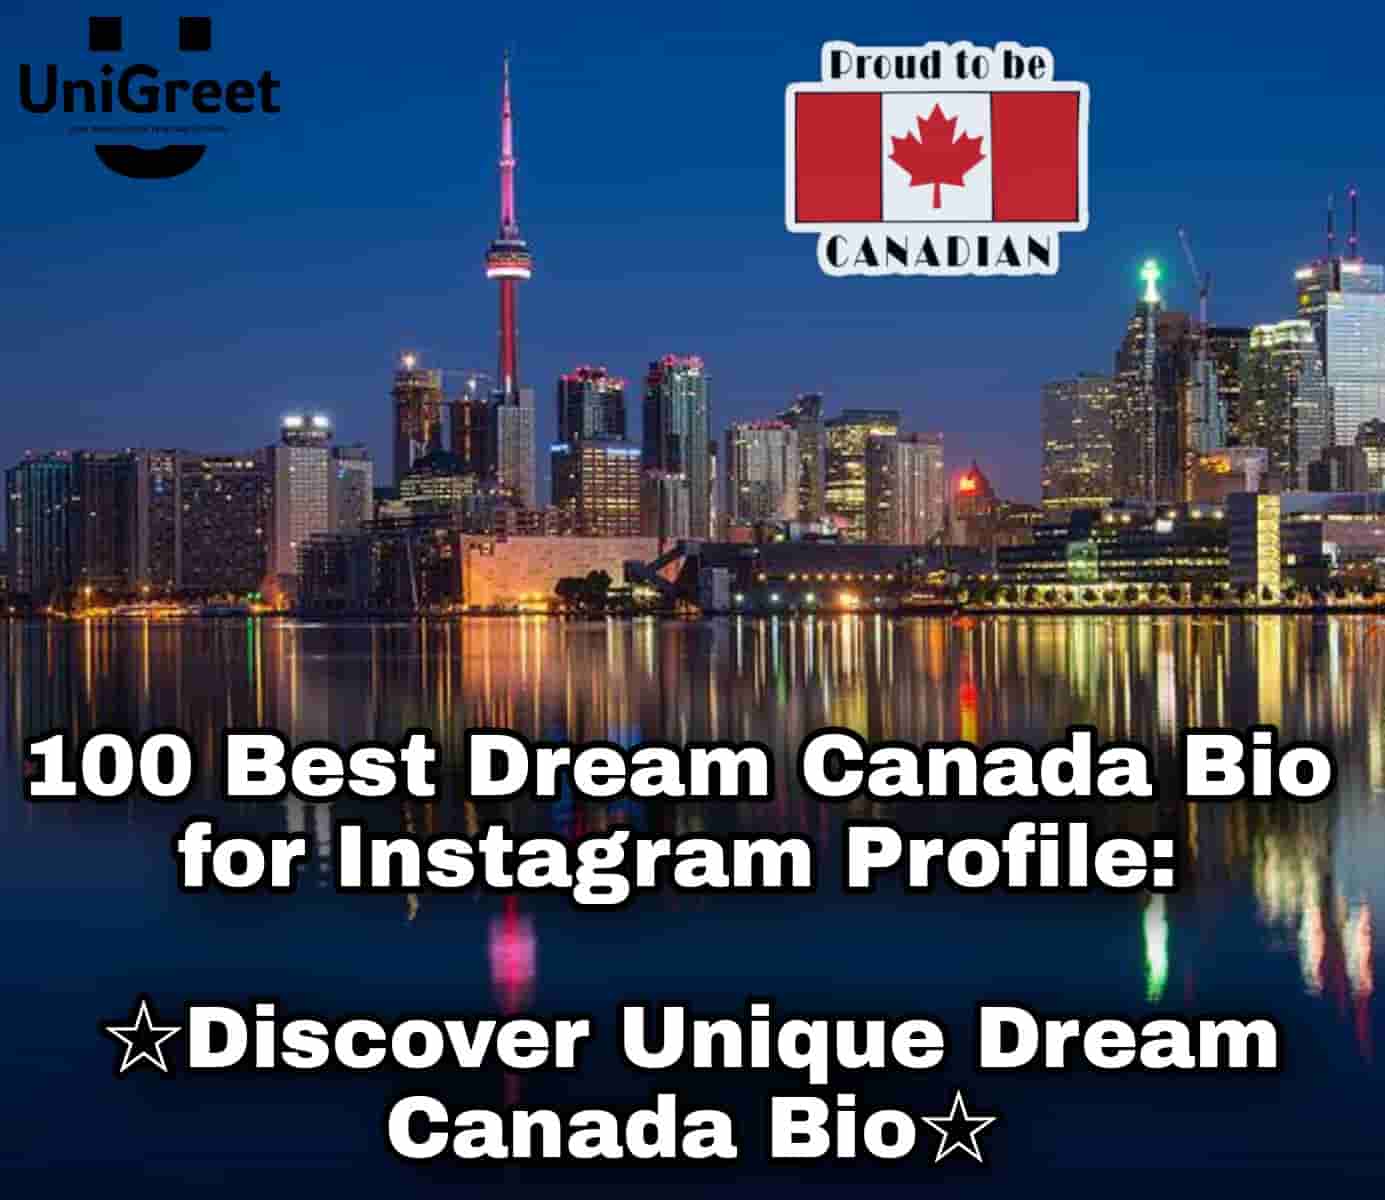 Dream Canada Bio for Instagram